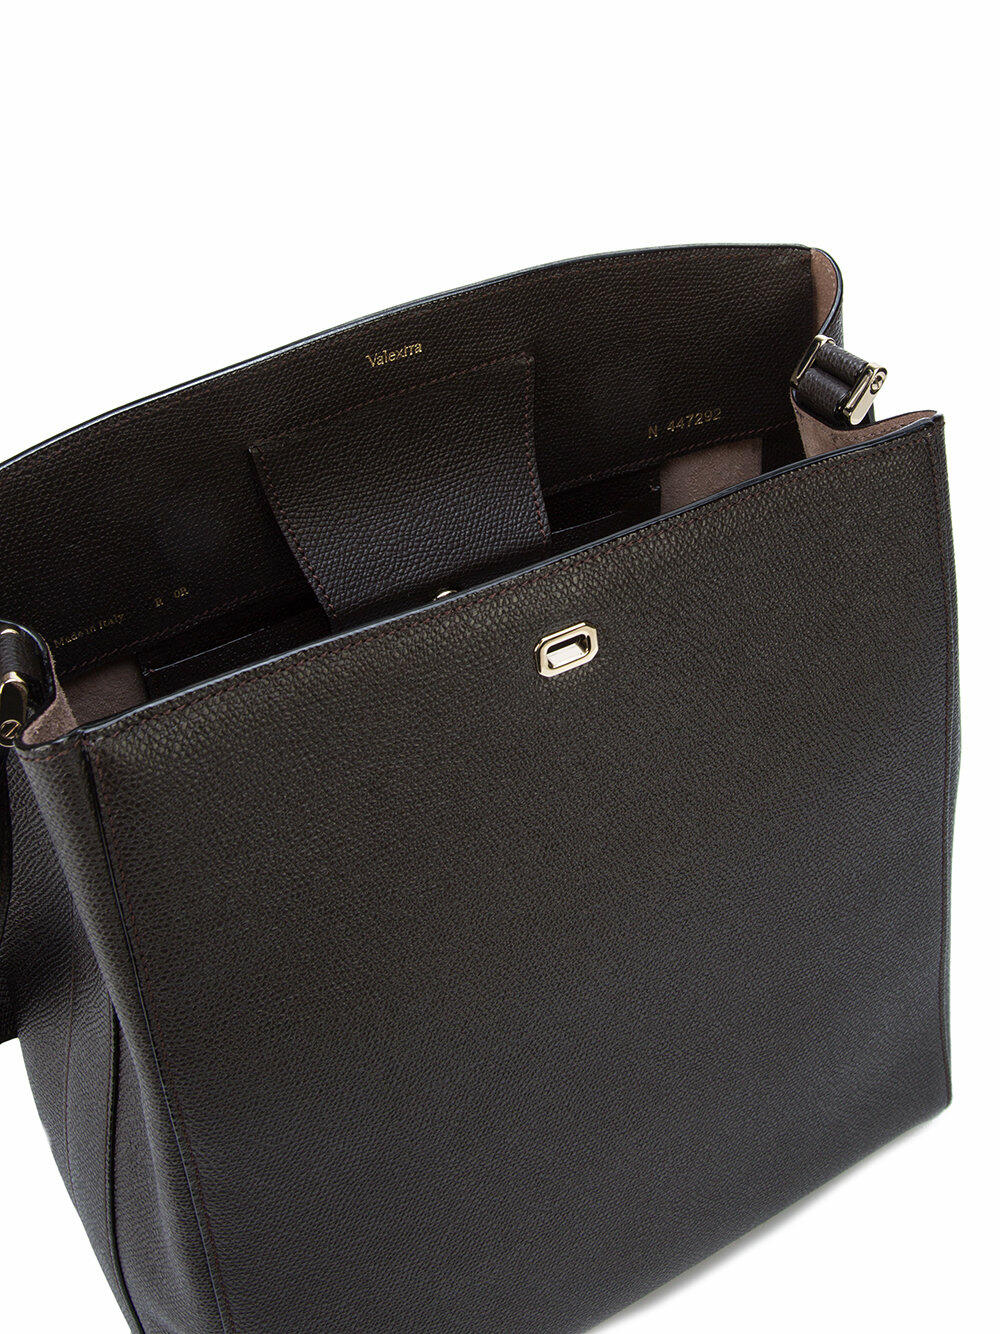 BRERA ITALY BLACK LEATHER SHOULDER BAG  Leather shoulder bag, Shoulder bag,  Brown leather purses